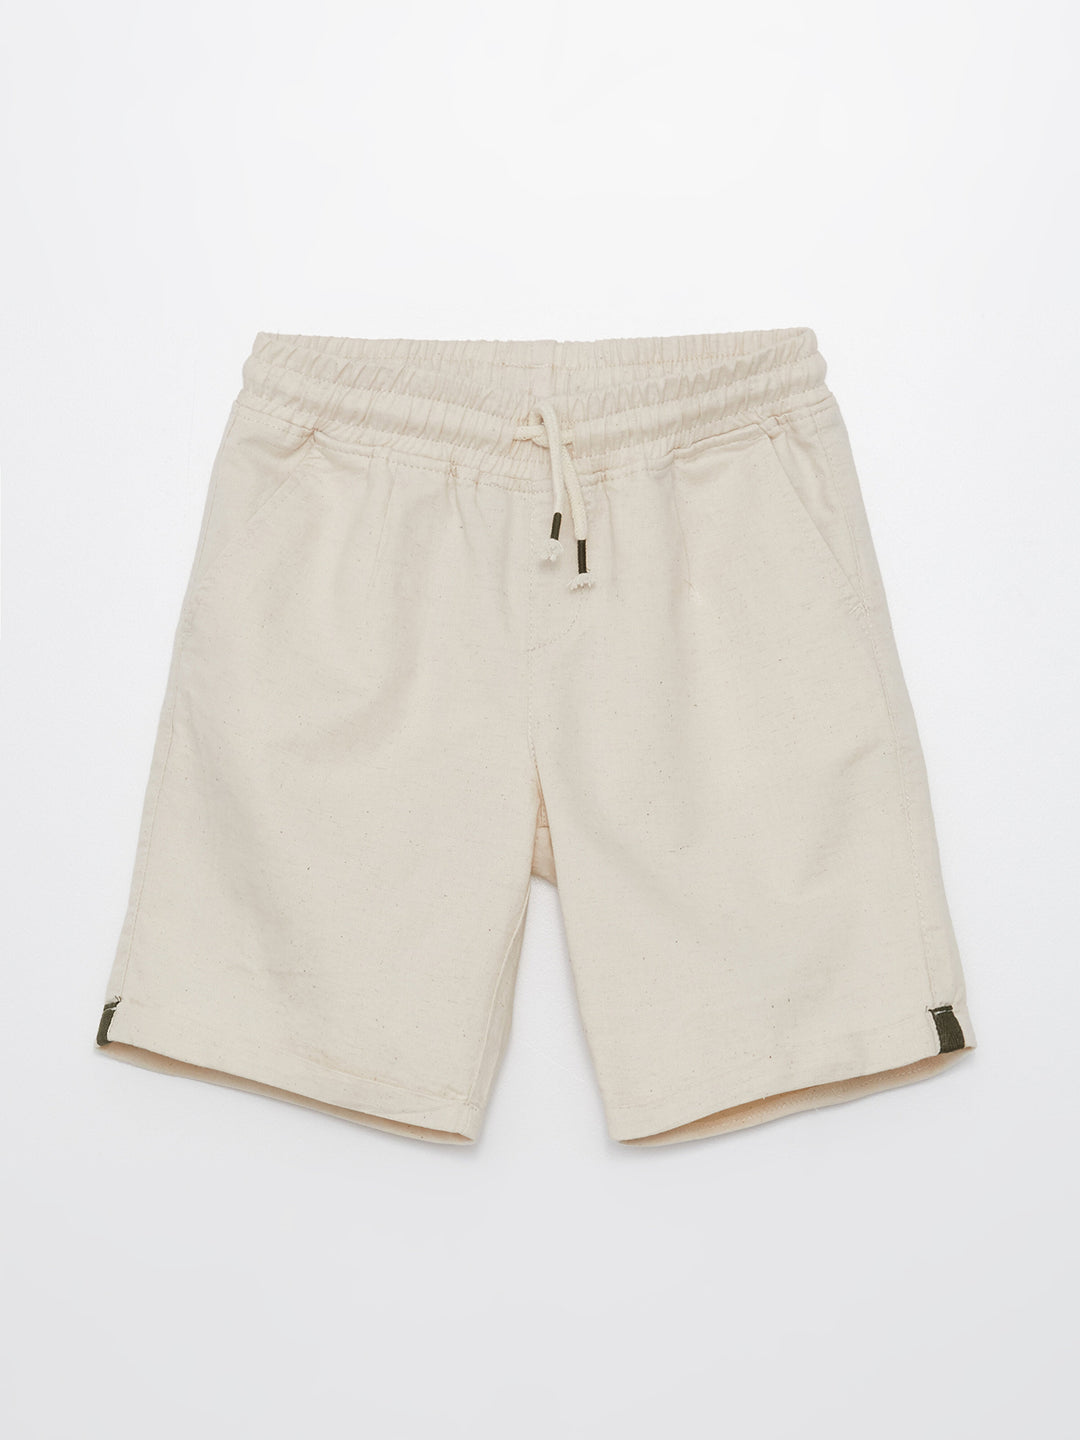 Linen Blend Boys' Shorts with Elastic Waist